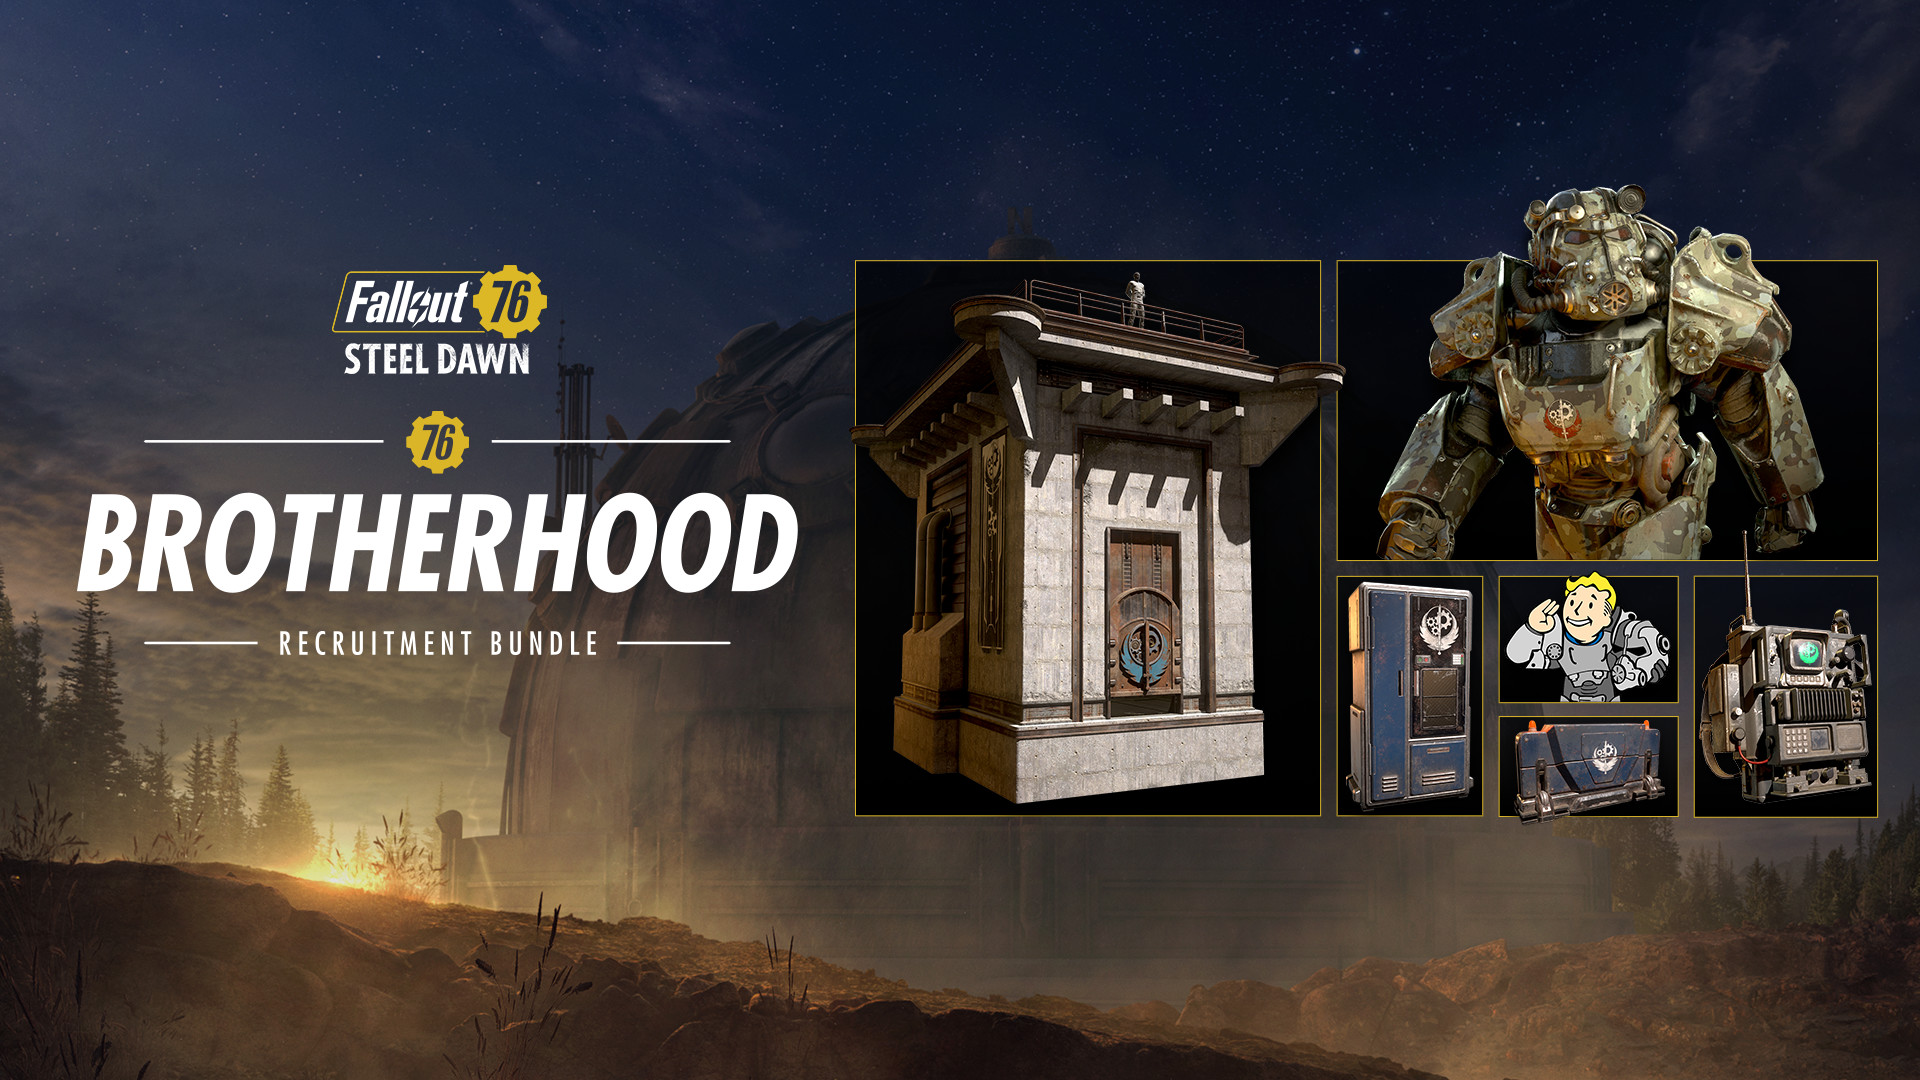 Fallout 76 - Brotherhood Recruitment Bundle DLC Steam CD Key